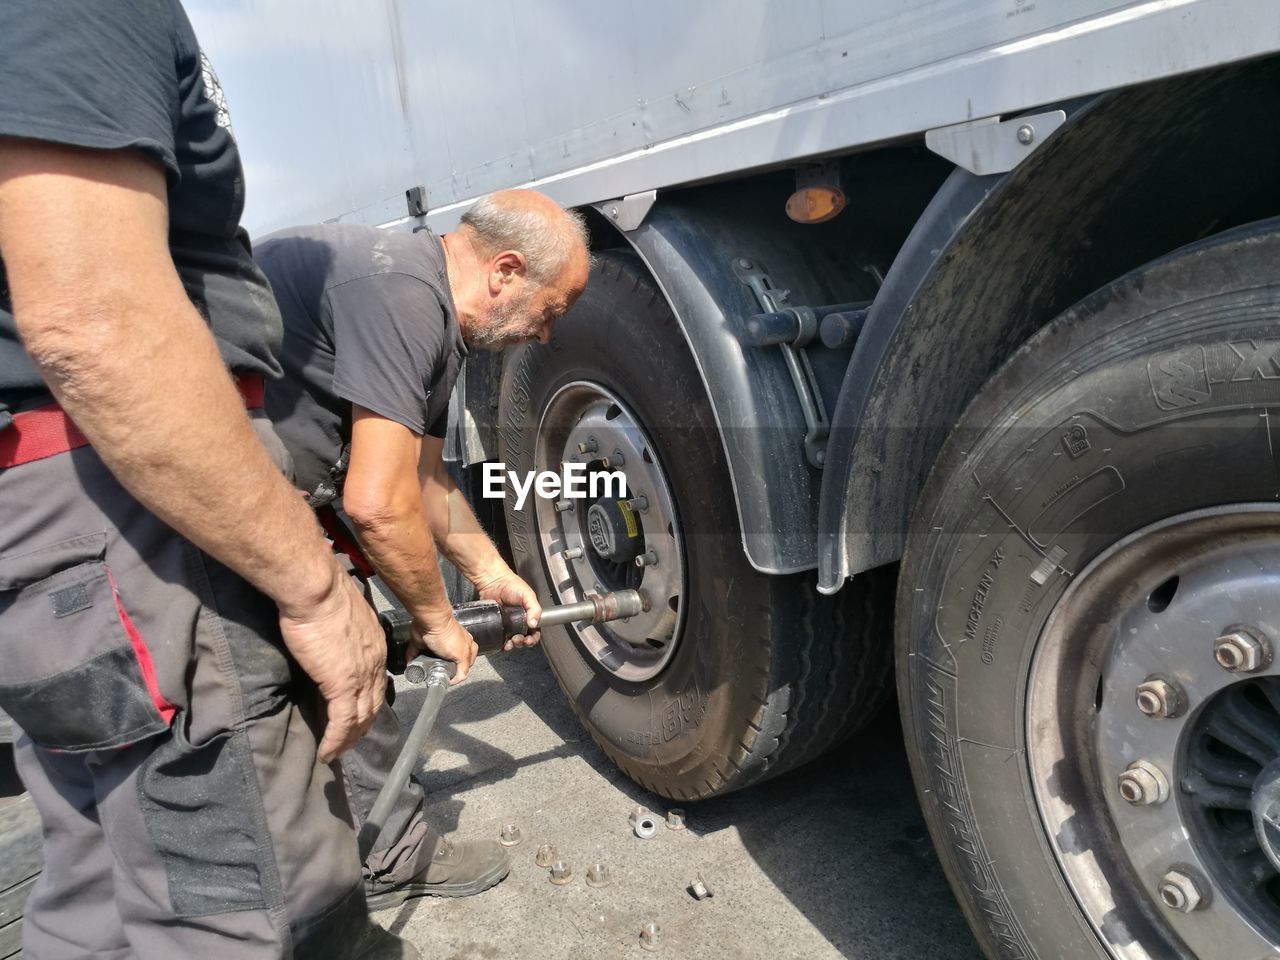 Manual worker inflating semi-truck tire